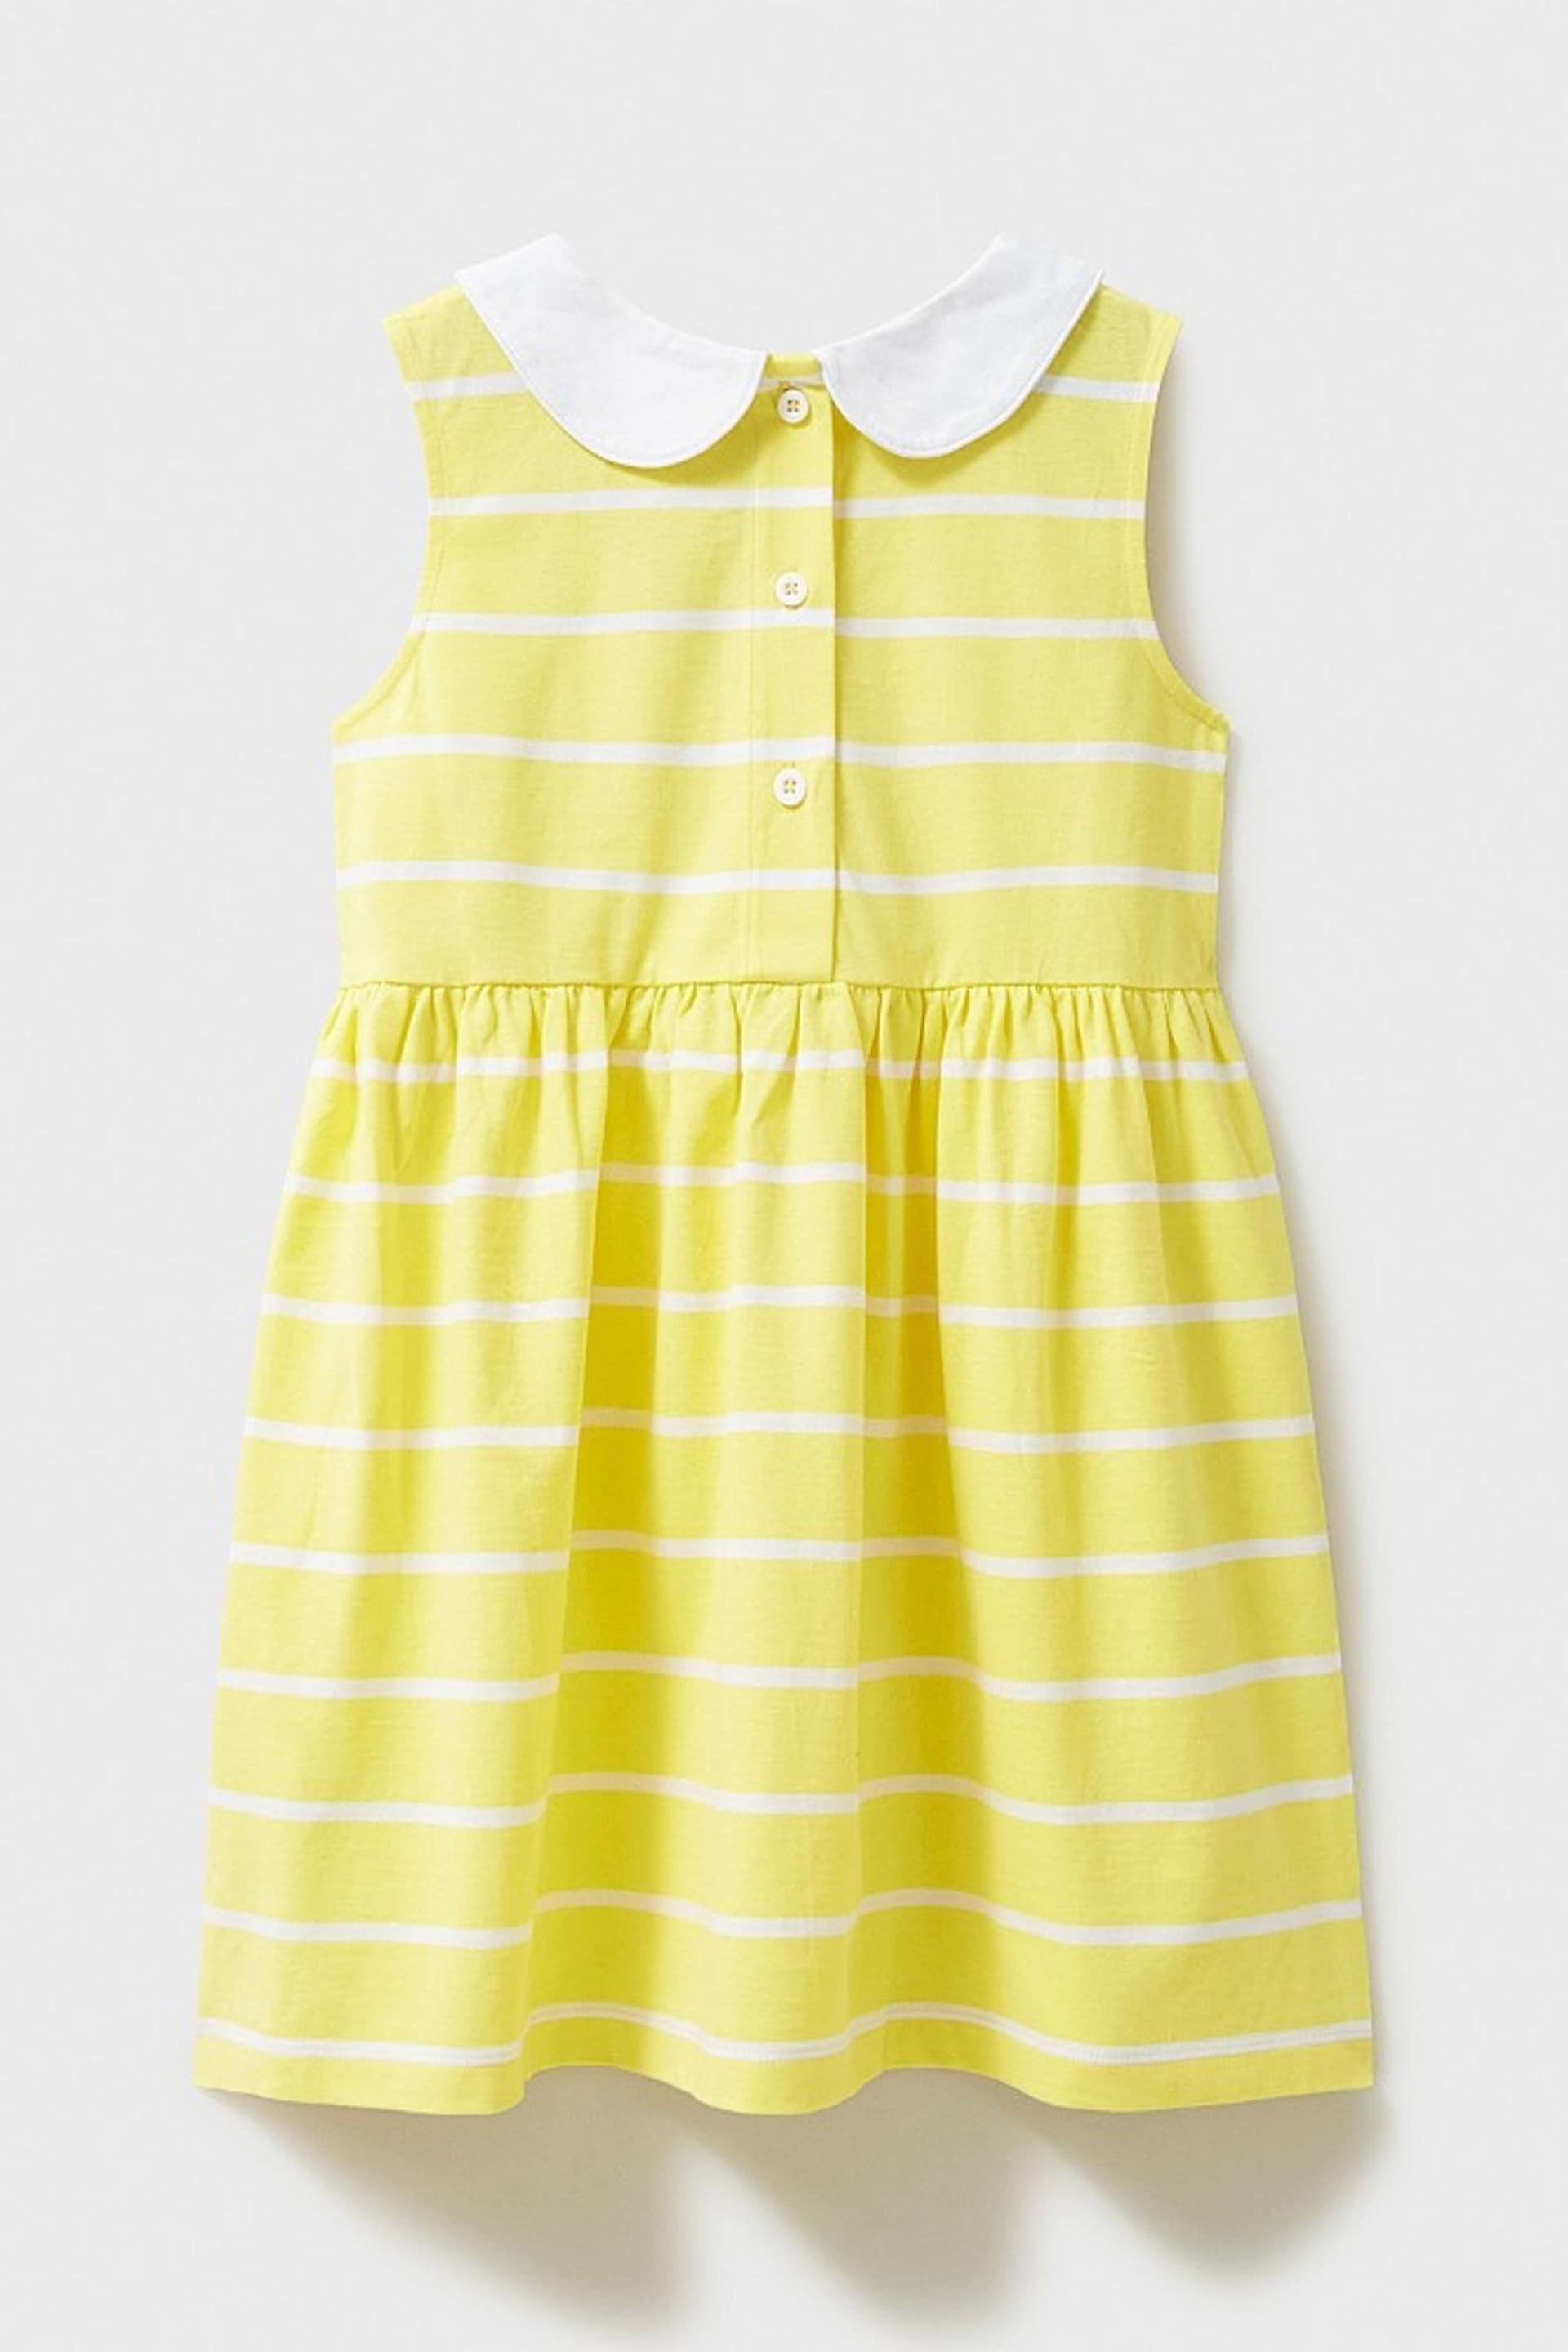 Crew Clothing Company Multi Yellow Stripe Cotton Sundress - Image 2 of 3